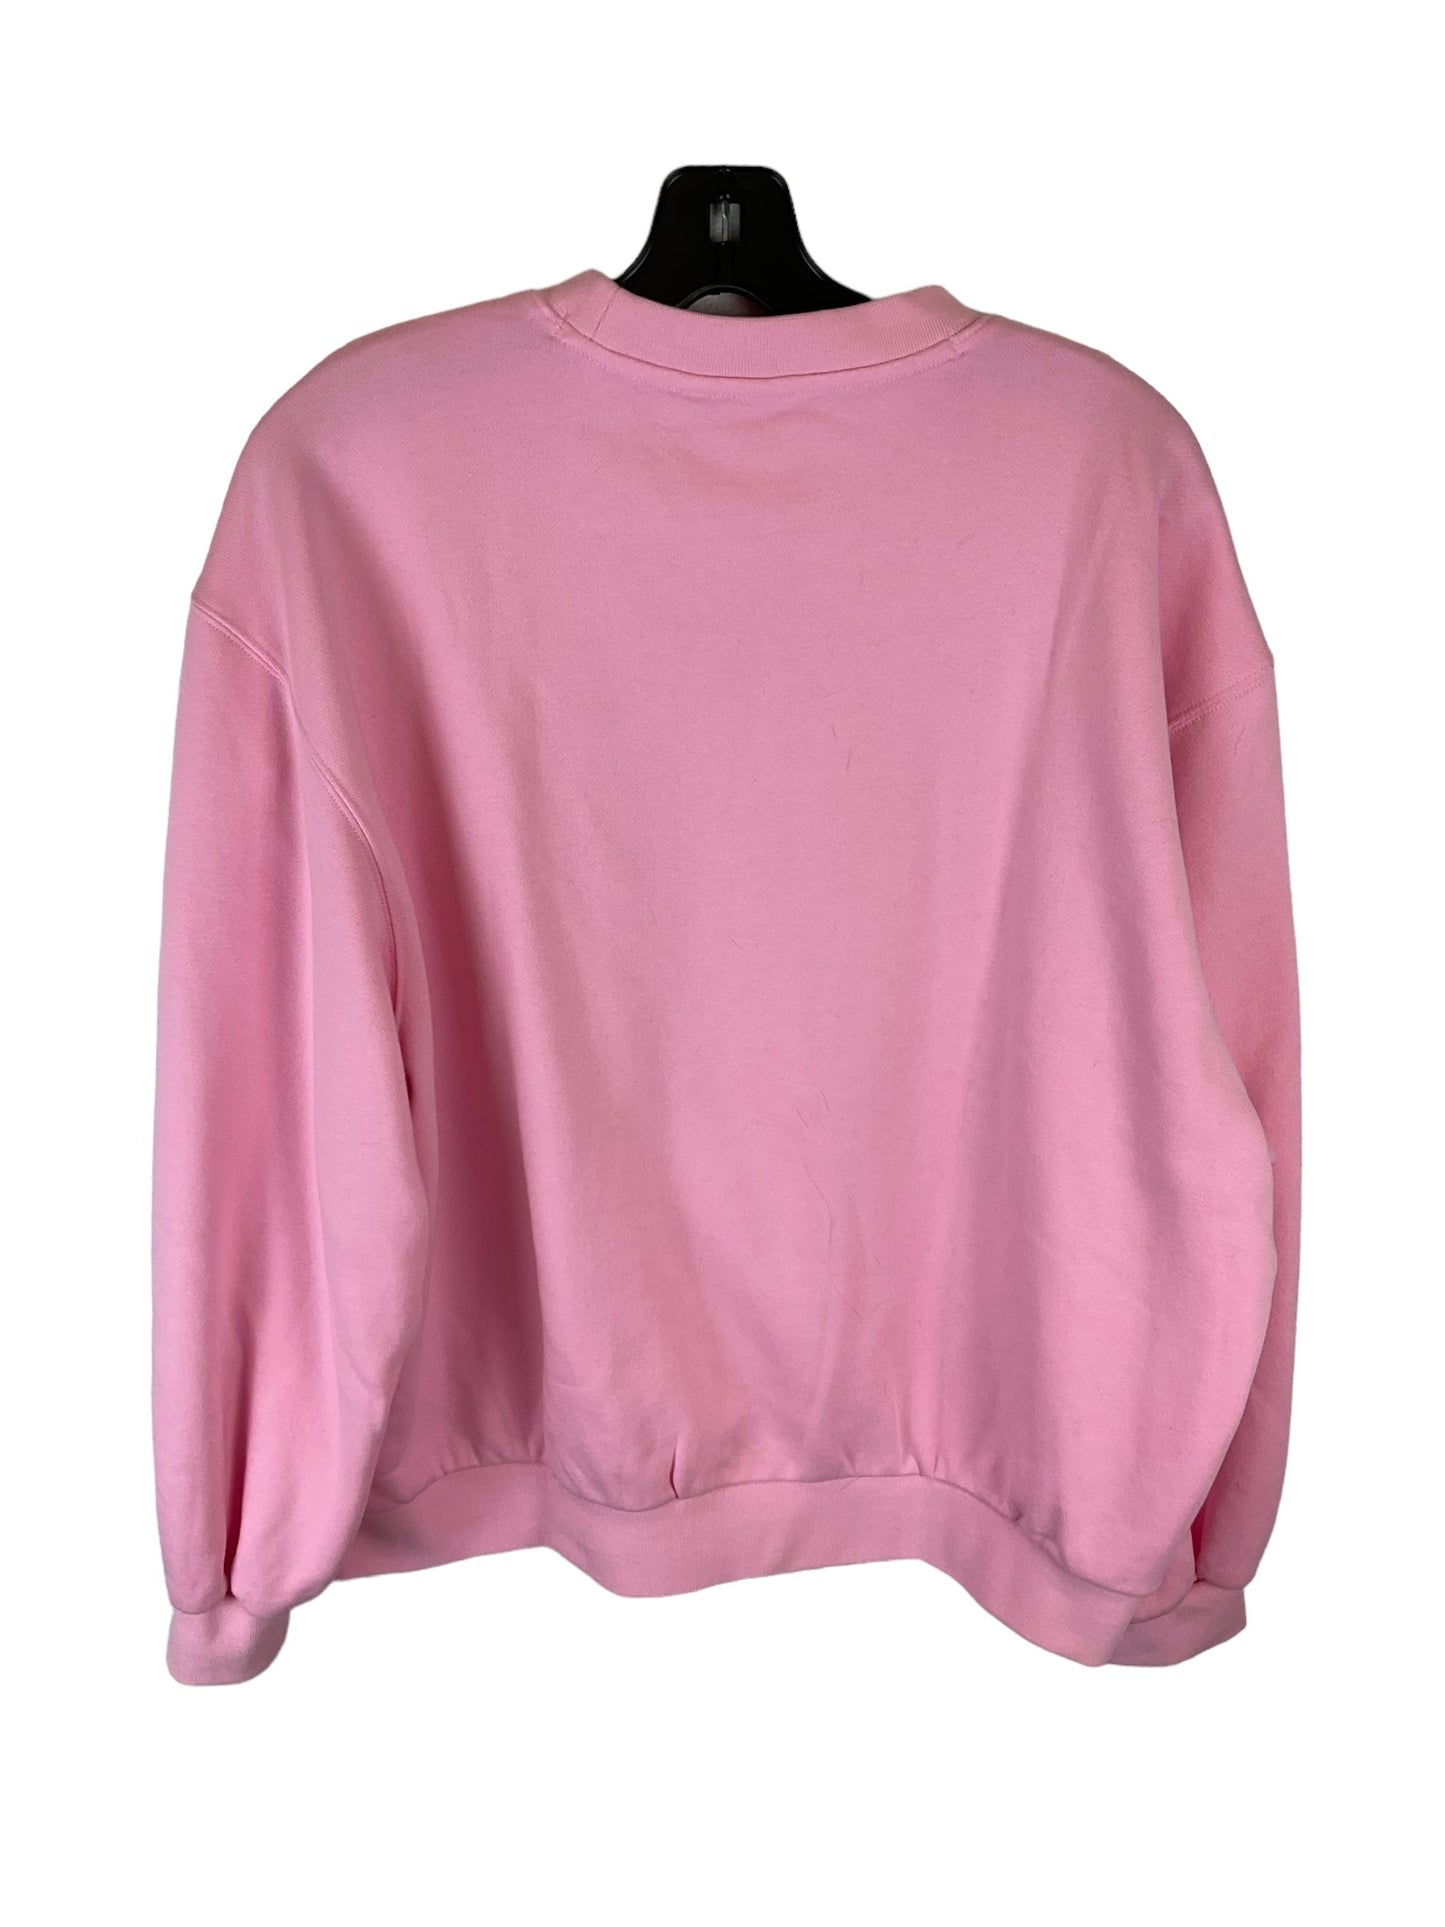 Sweatshirt Crewneck By Adidas  Size: M